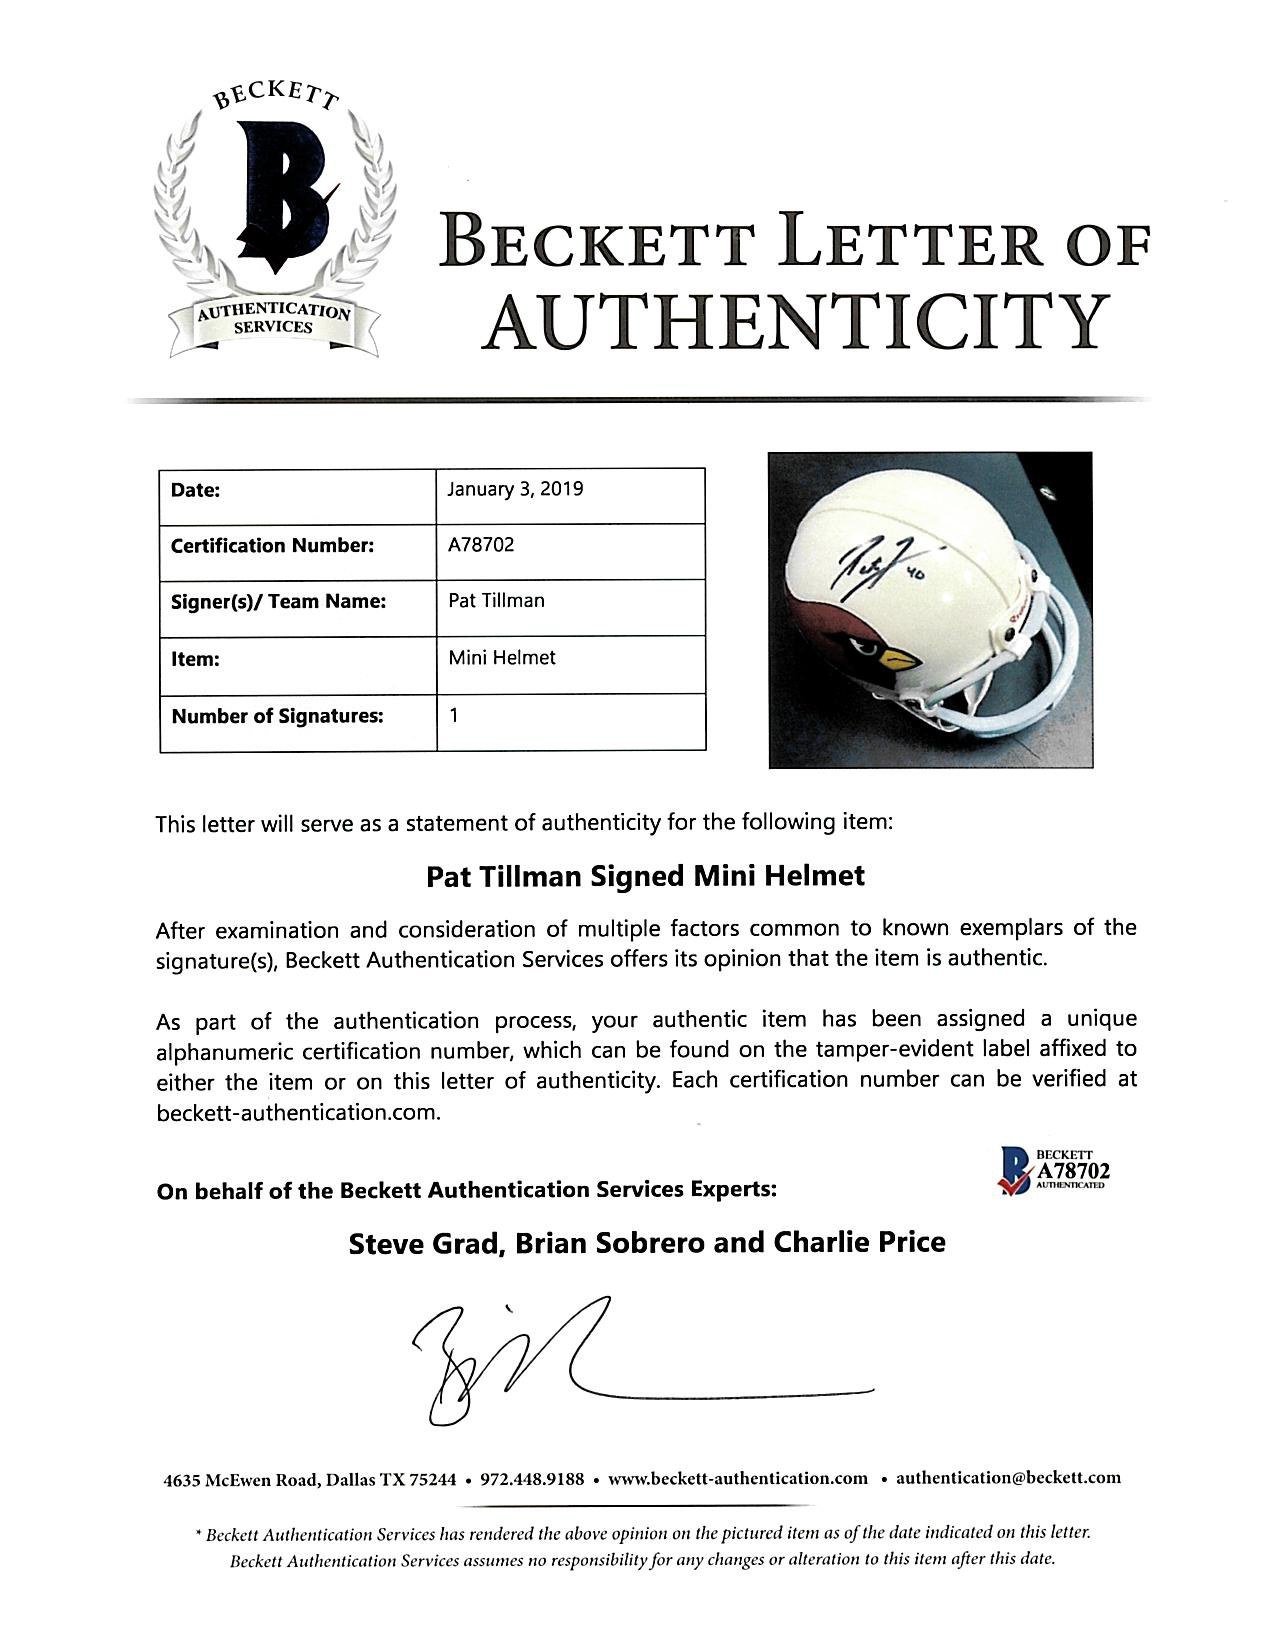 Pat Tillman Signed Arizona Cardinals Jersey - Beckett LOA on